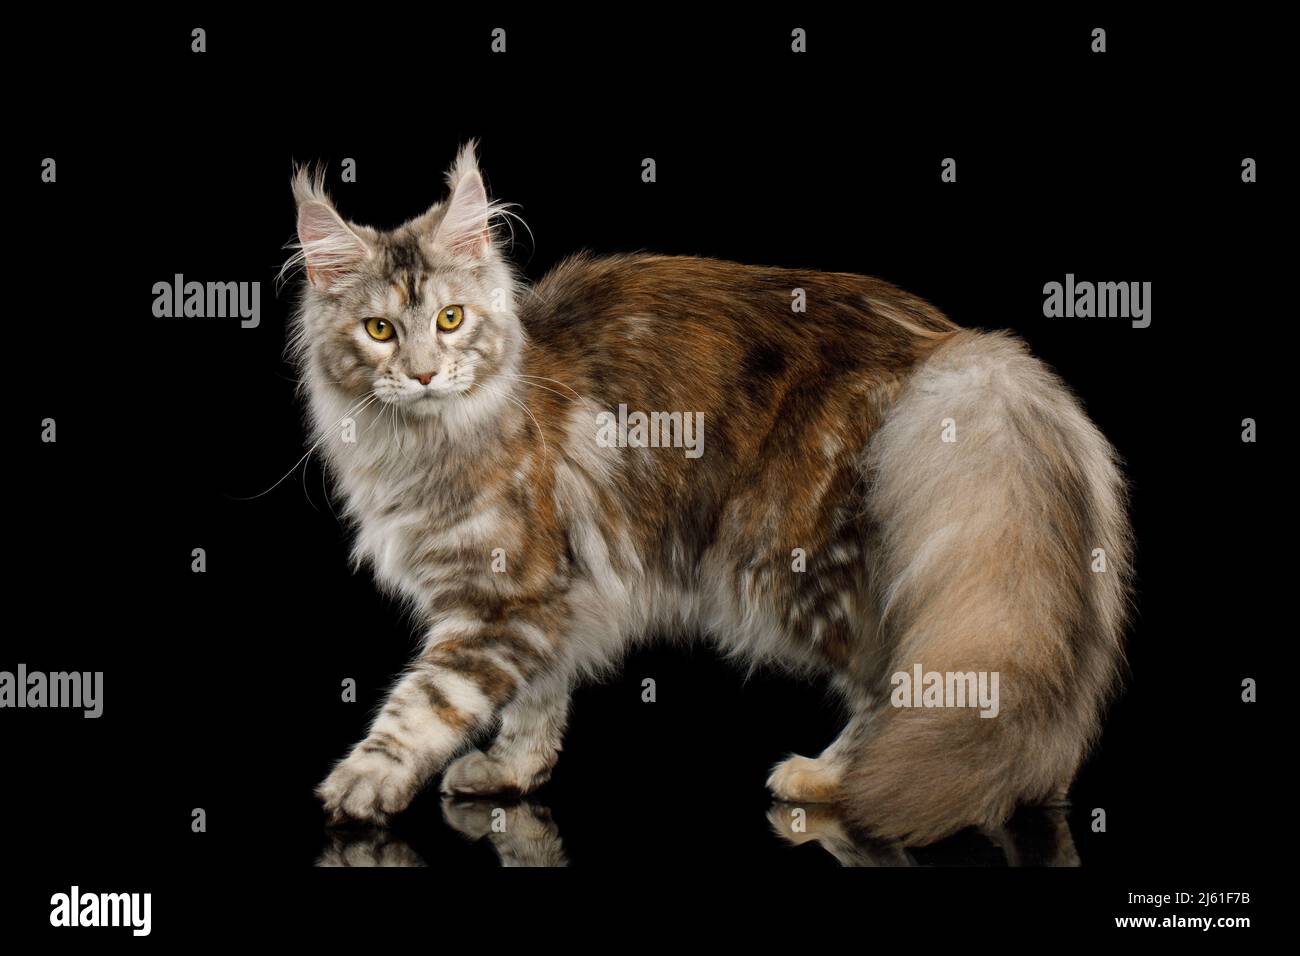 Juguetón gato montés de maine con vista lateral de cola peluda sobre fondo negro aislado Foto de stock